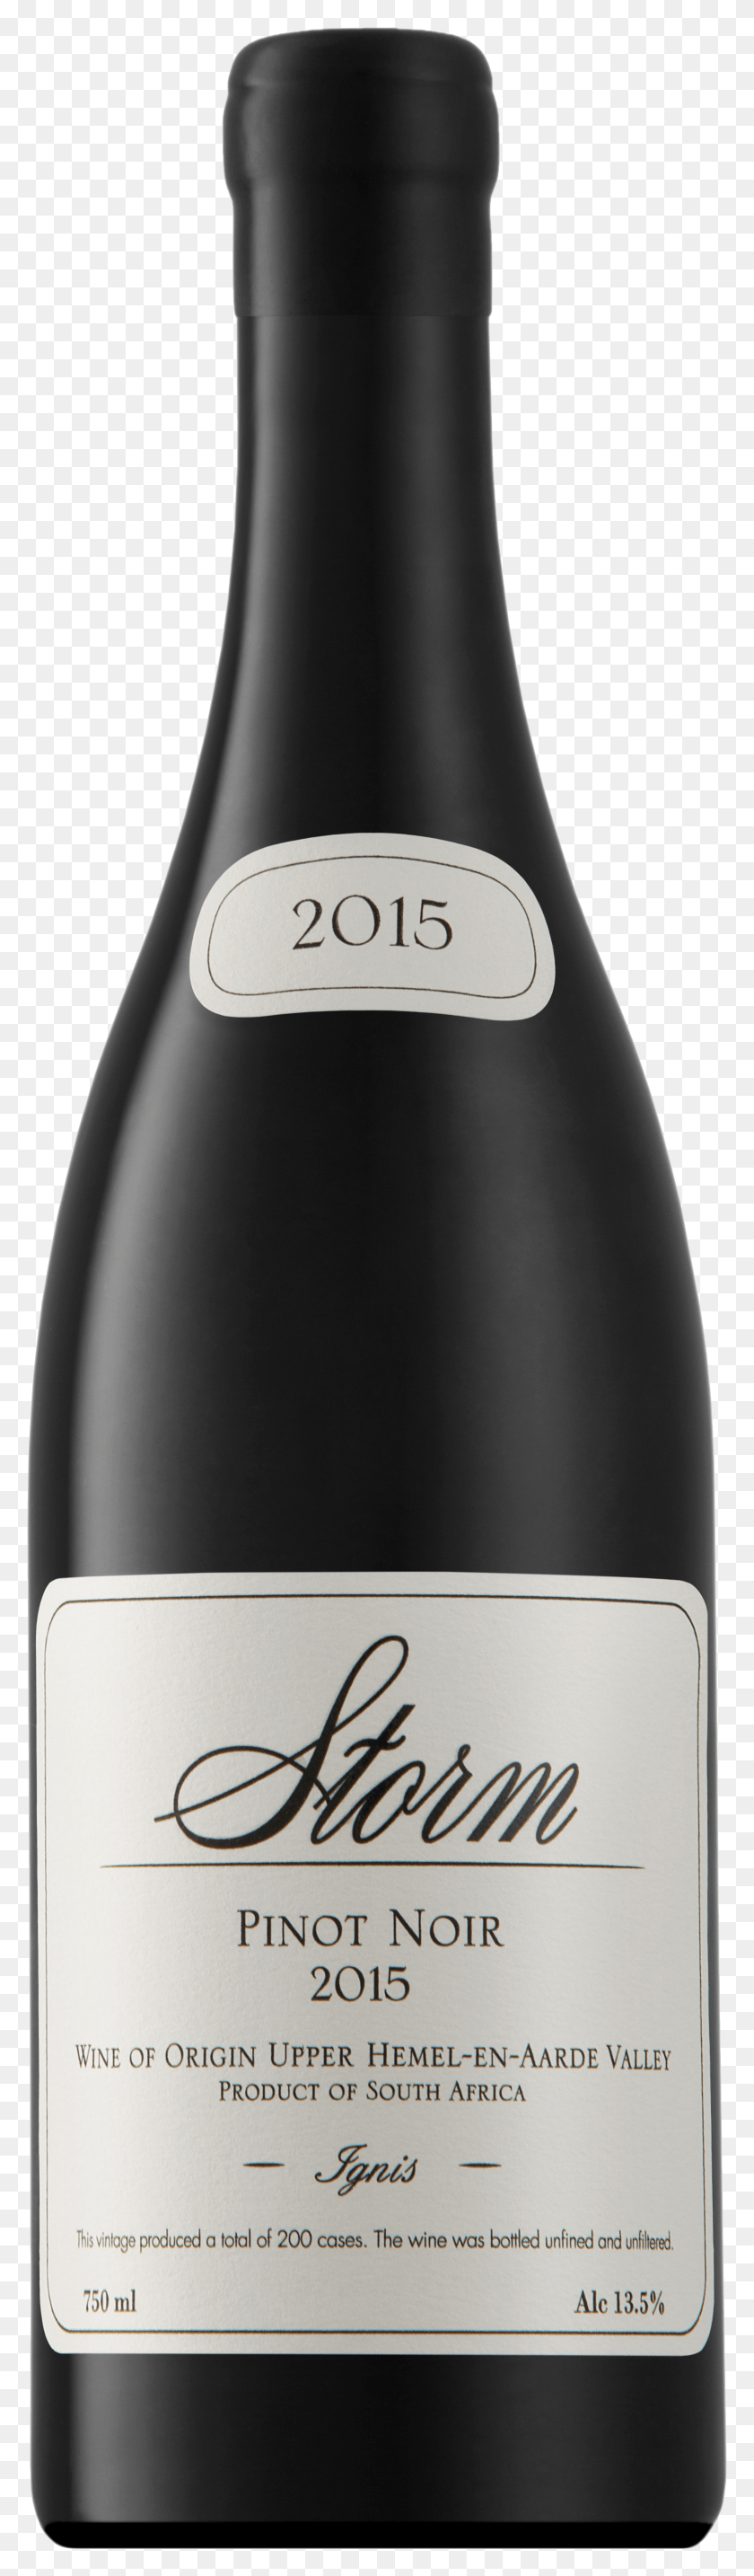 2342x8432 Tormenta Ignis Pinot Noir 2015 Domaine Jean Michel Giboulot Hd Png